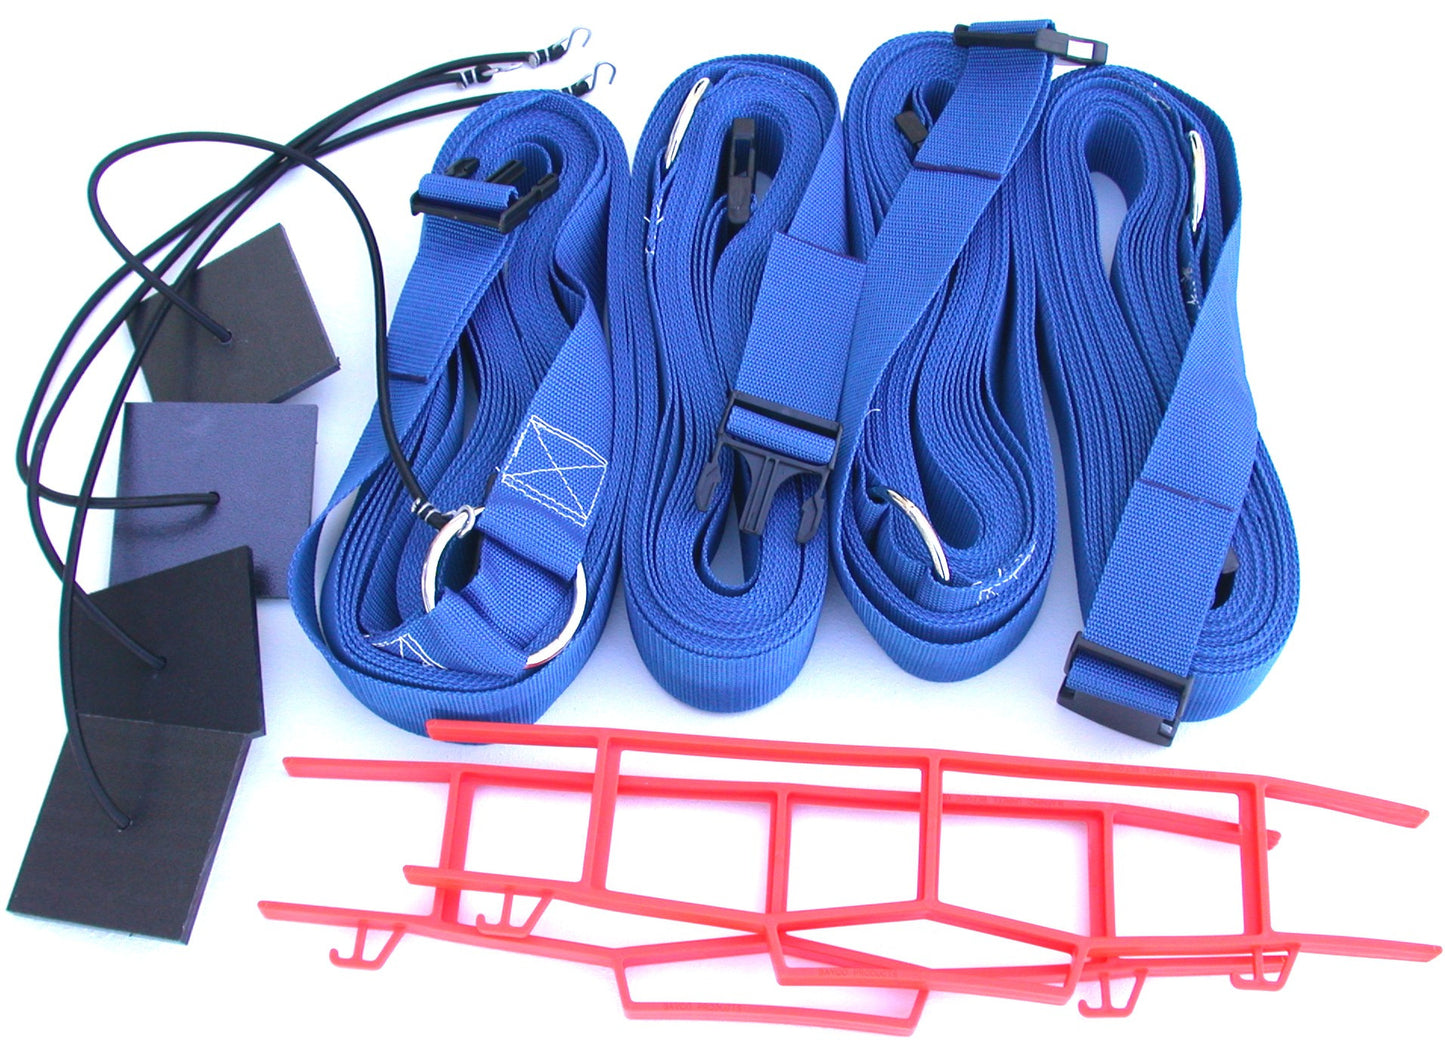 19ABUB-blue 2-inch adjustable web boundary, sand plates, storage winders